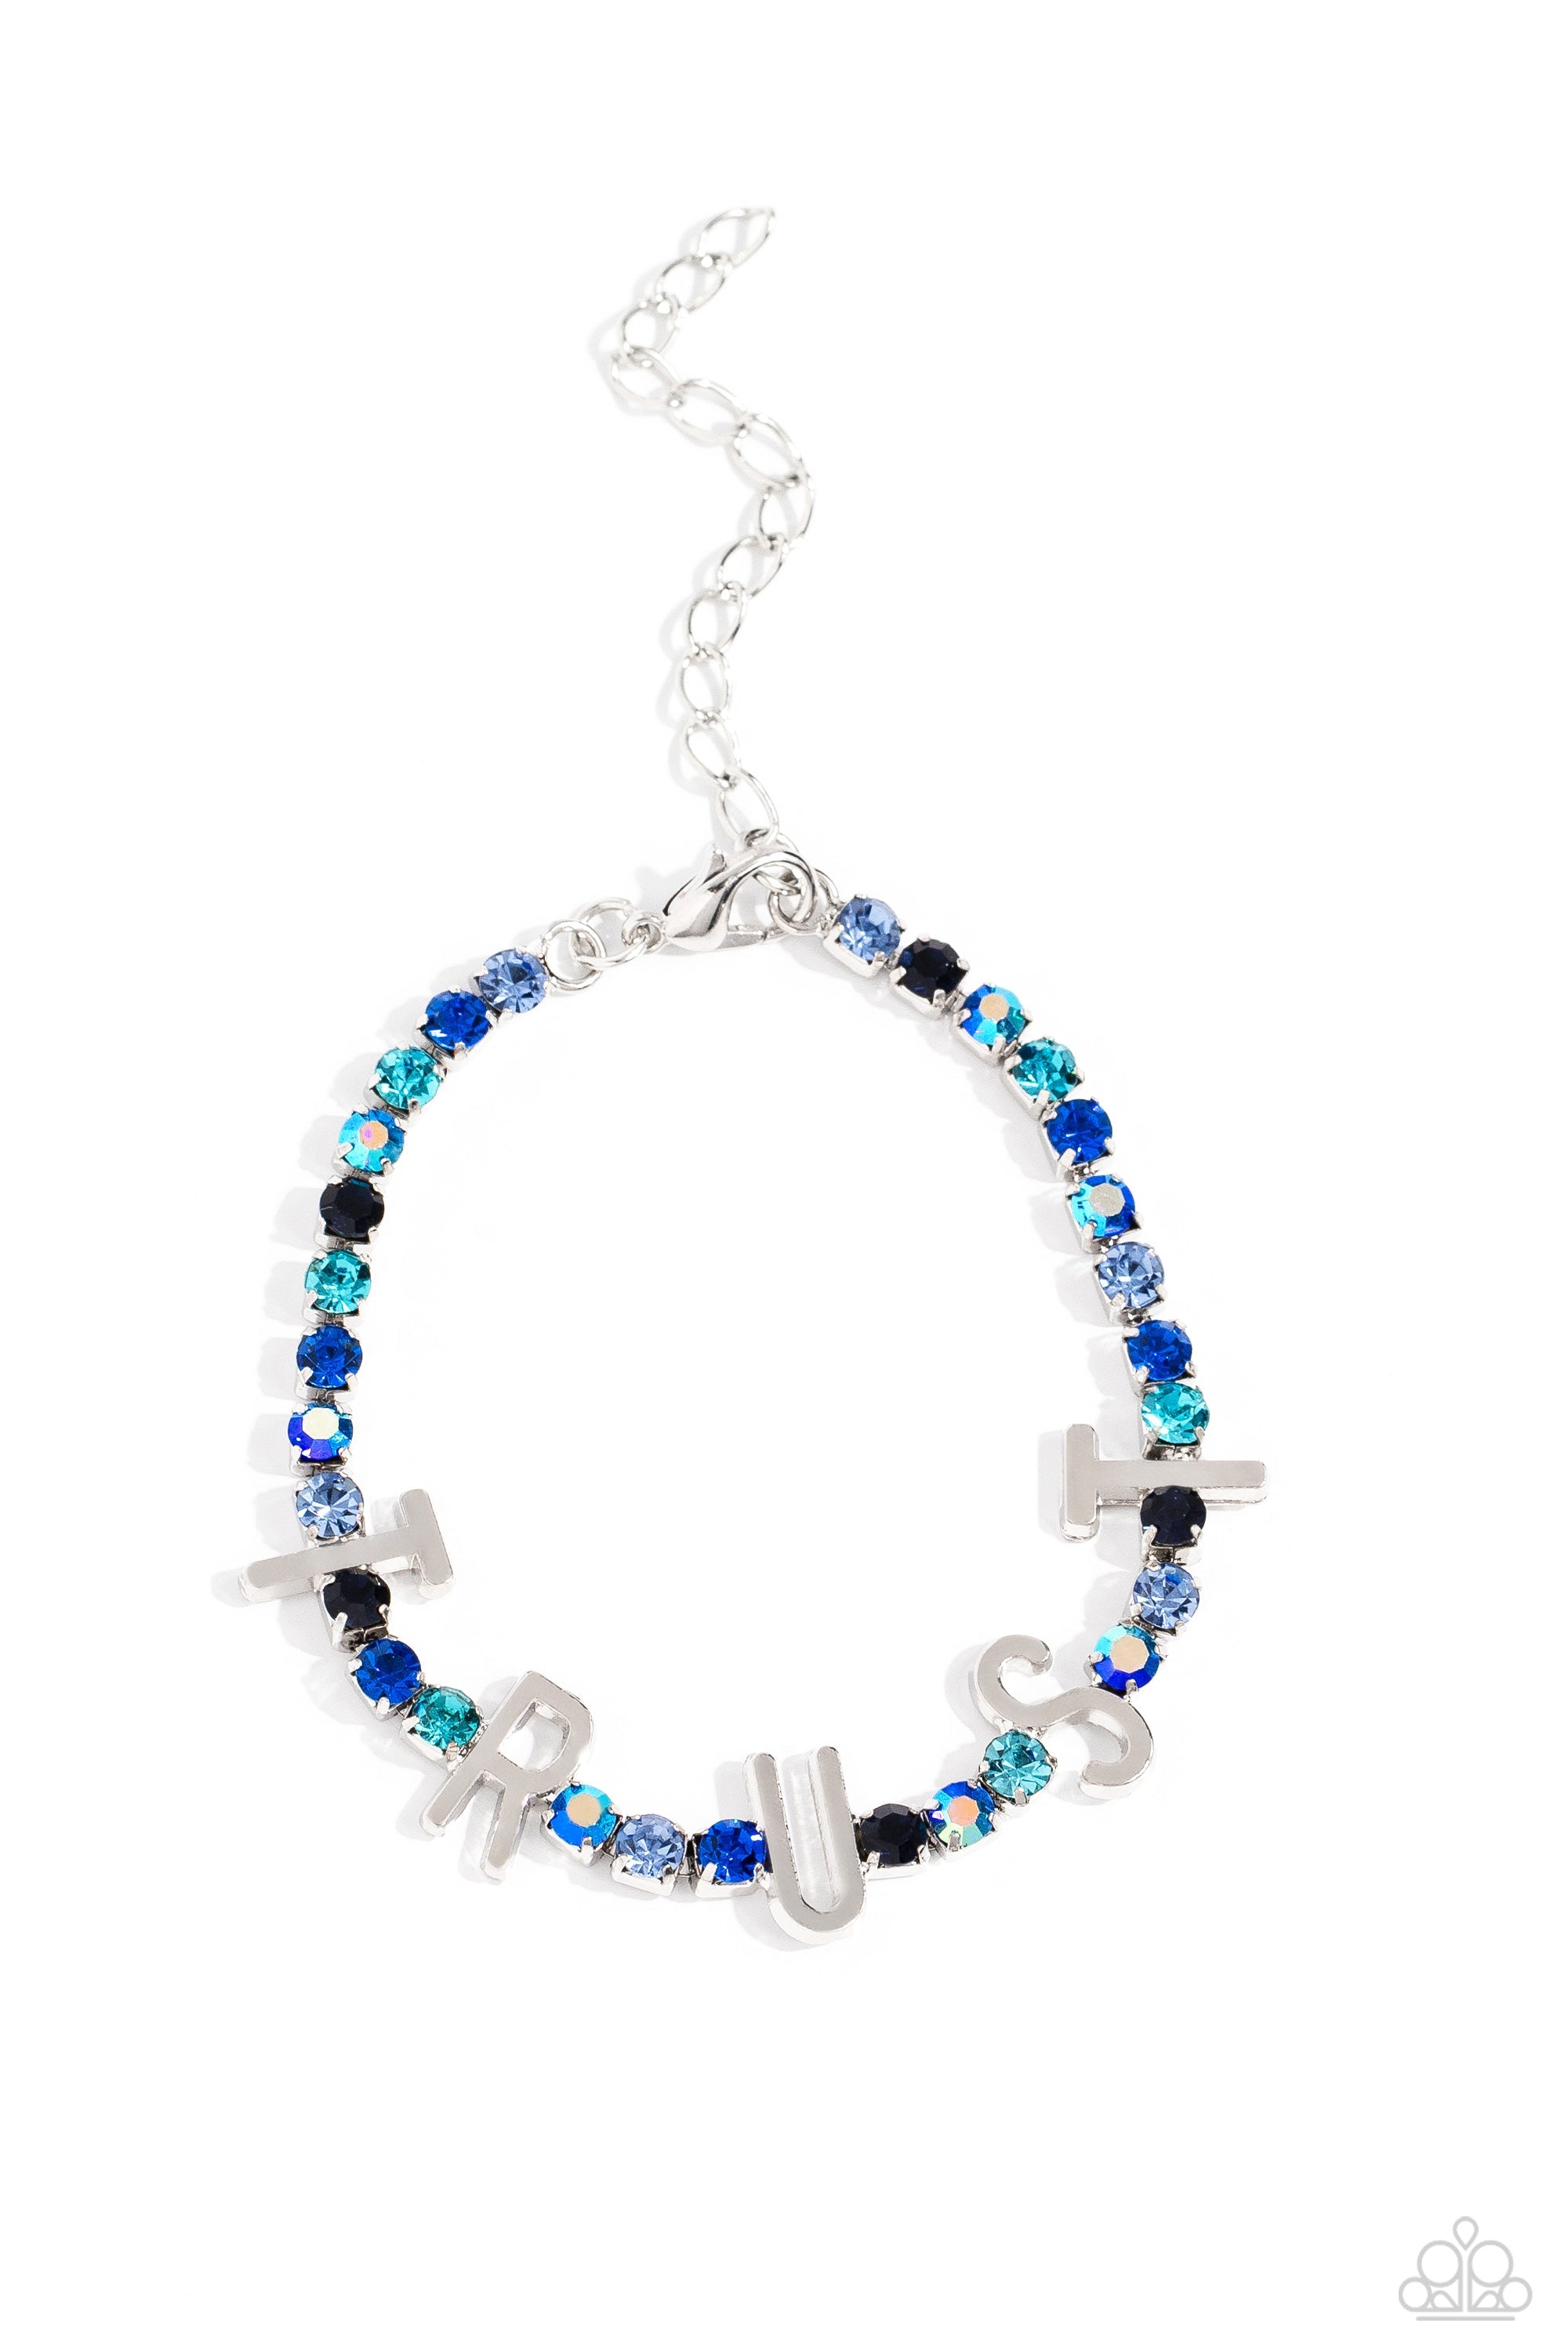 I Will Trust In You Blue Rhinestone Inspirational Bracelet - Paparazzi Accessories- lightbox - CarasShop.com - $5 Jewelry by Cara Jewels